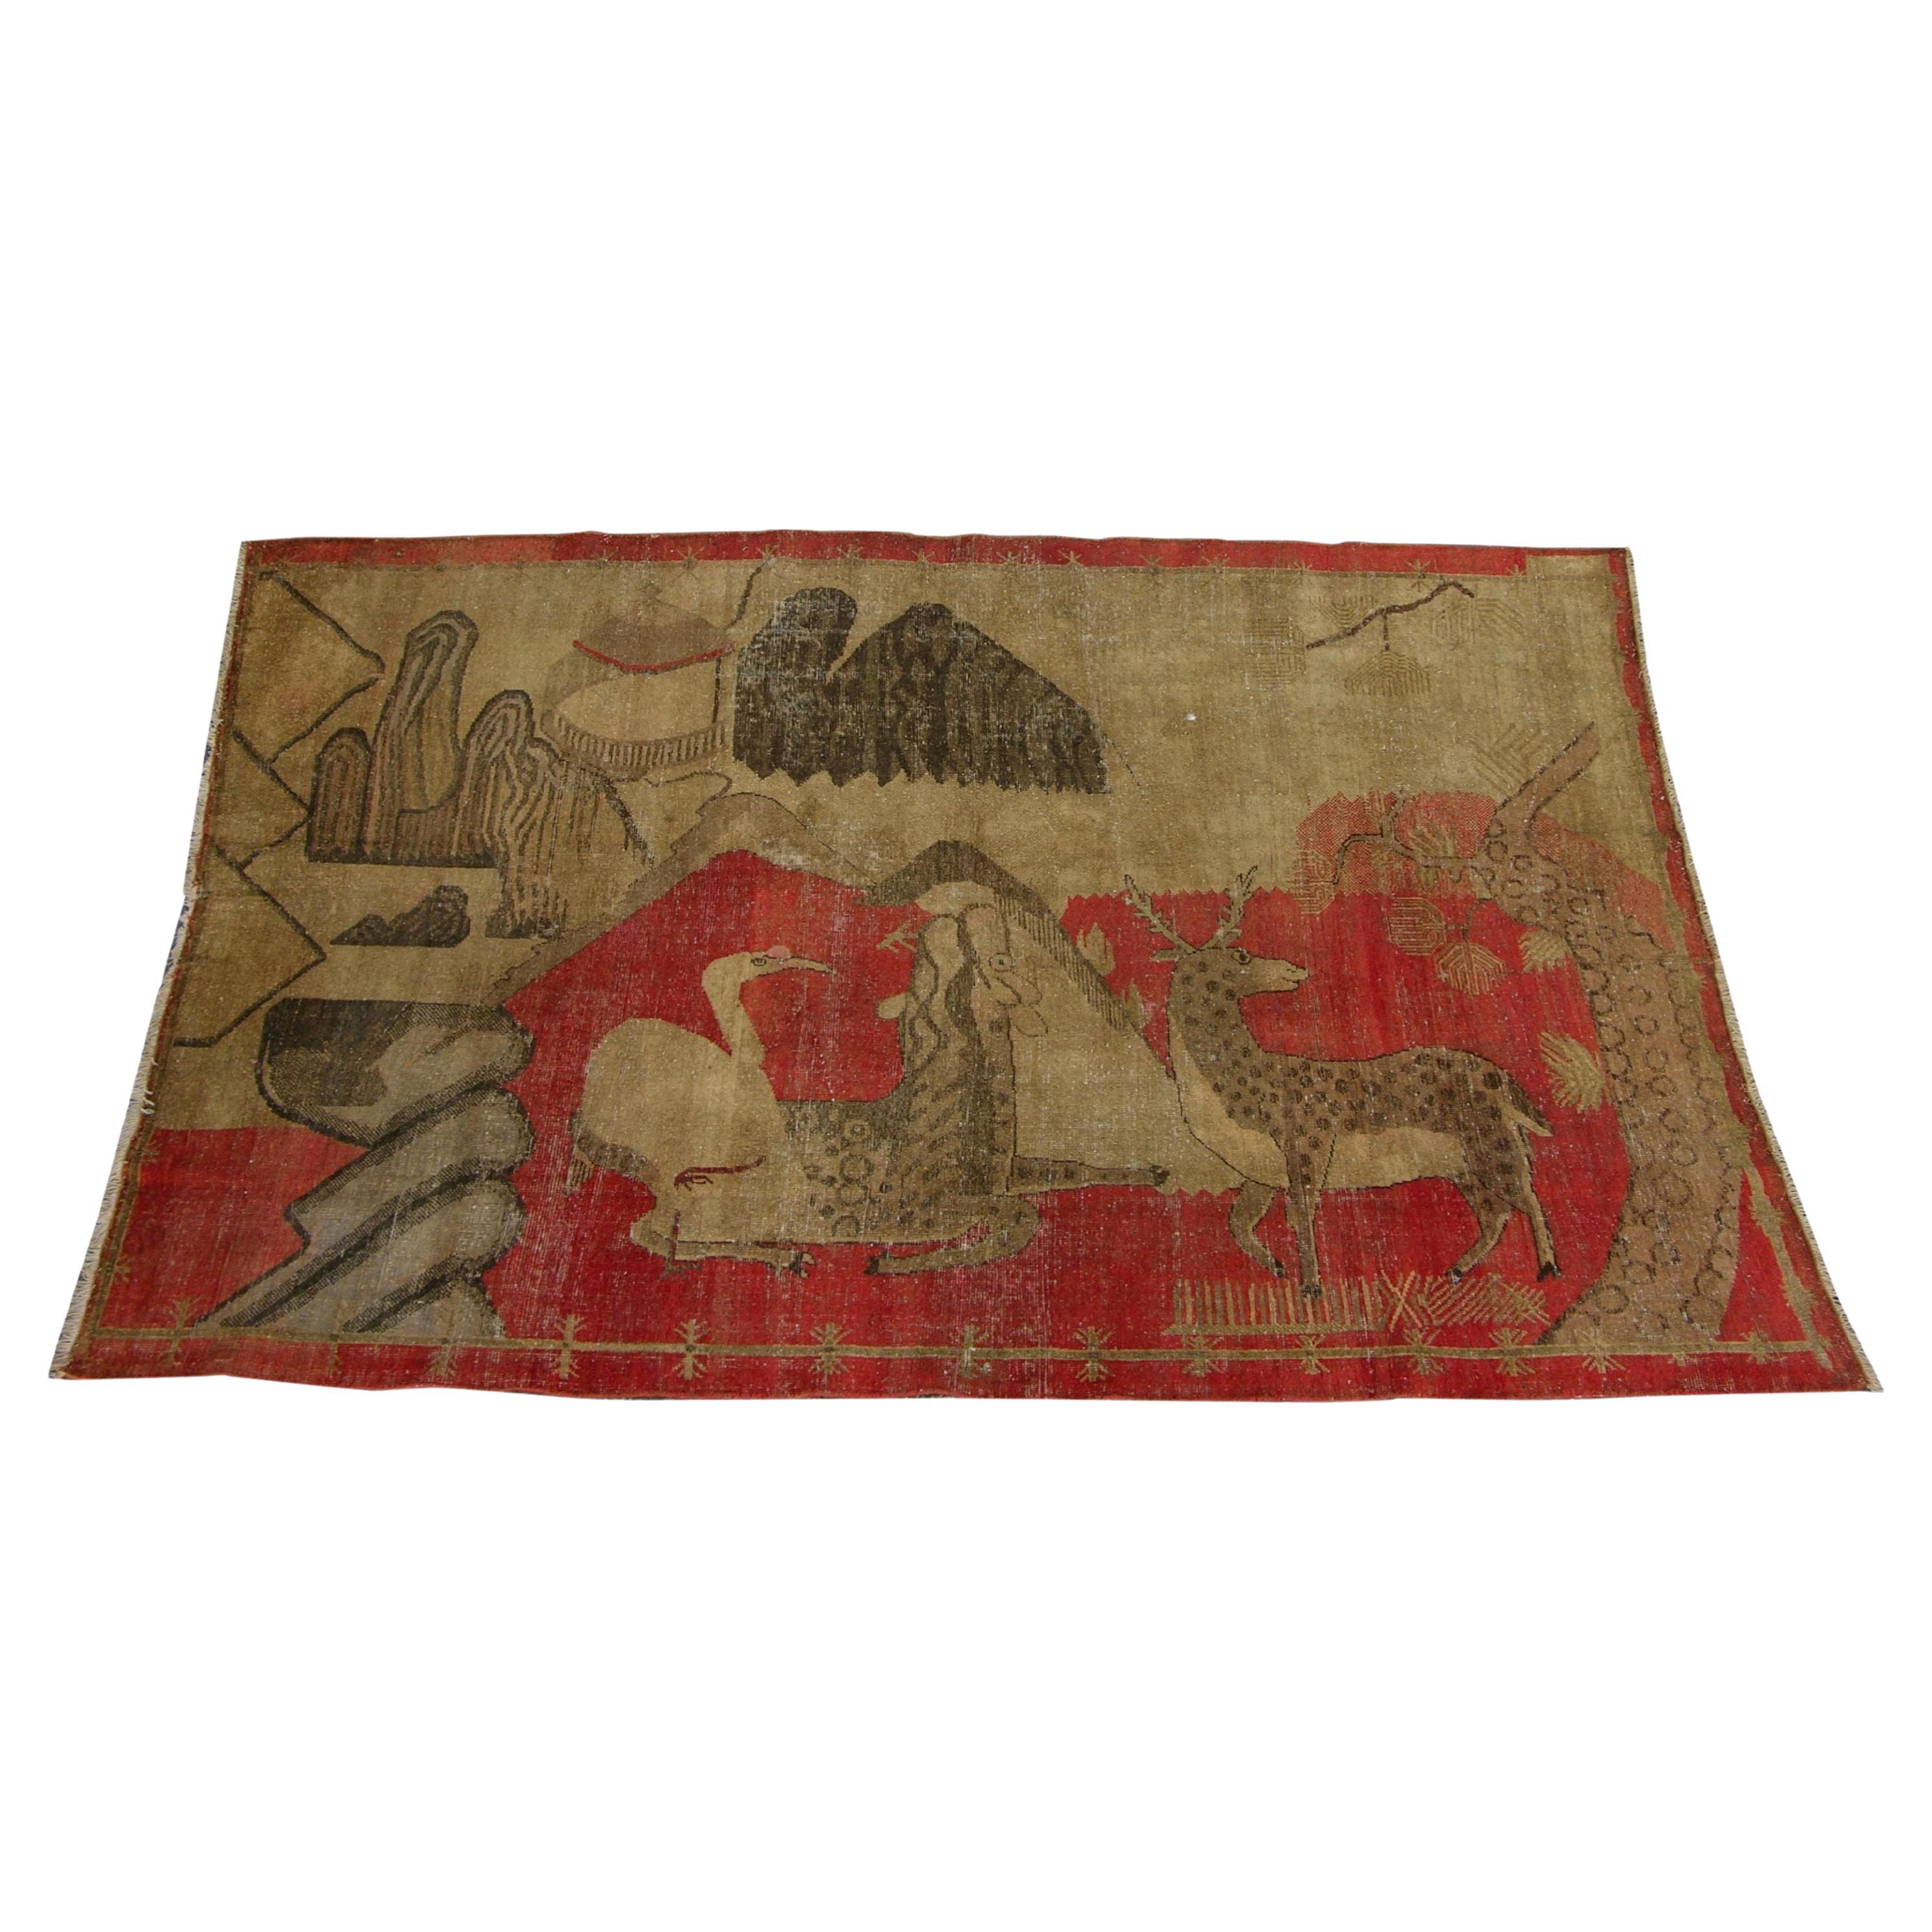 Antique Samarkand Rug with Animal Print Design